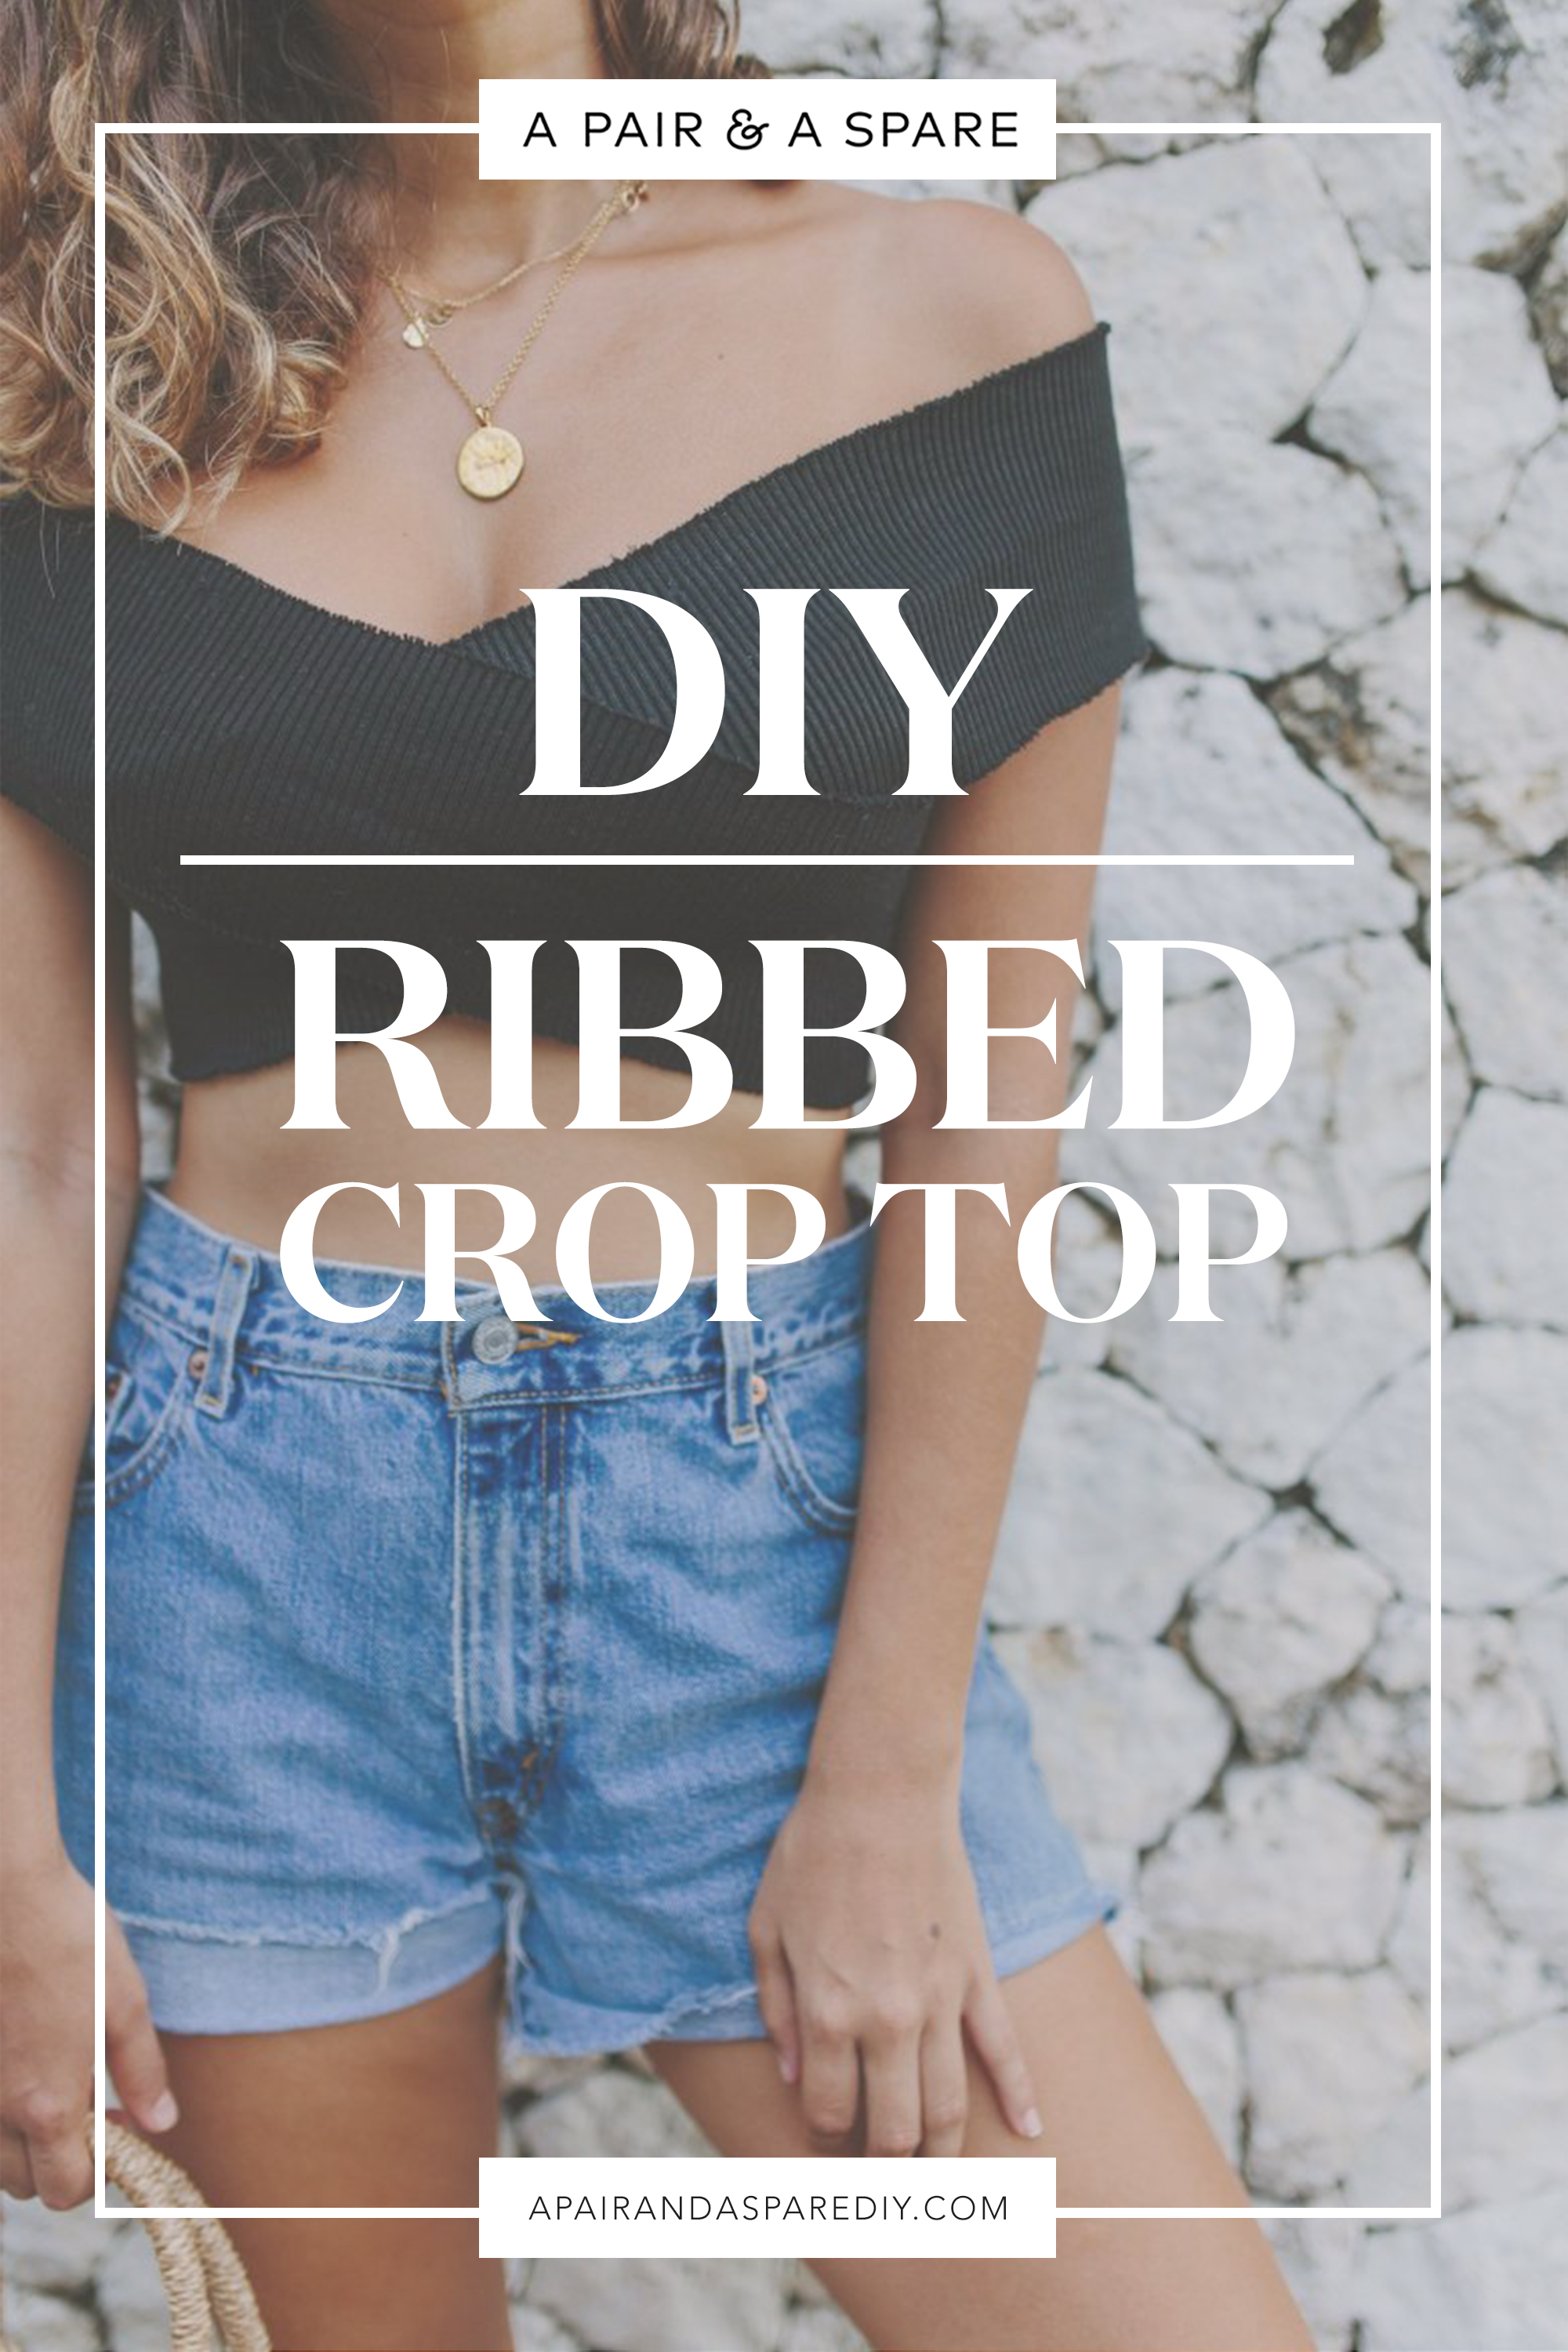 DIY Ribbed Bandage Crop Top